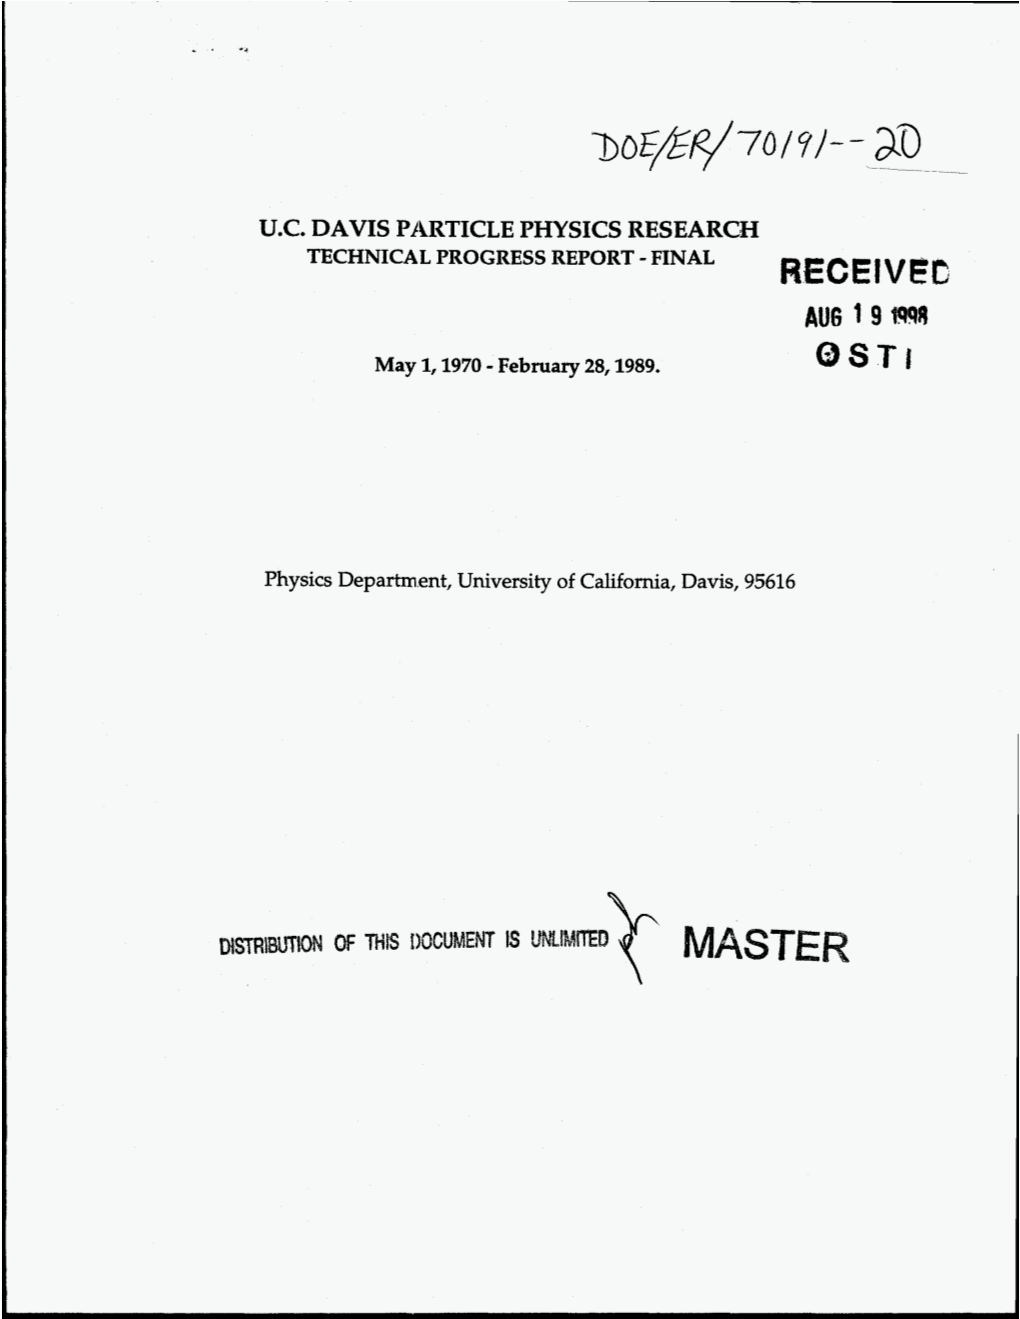 U.C. Davis Particle Physics Research Technical Progress Report - Final